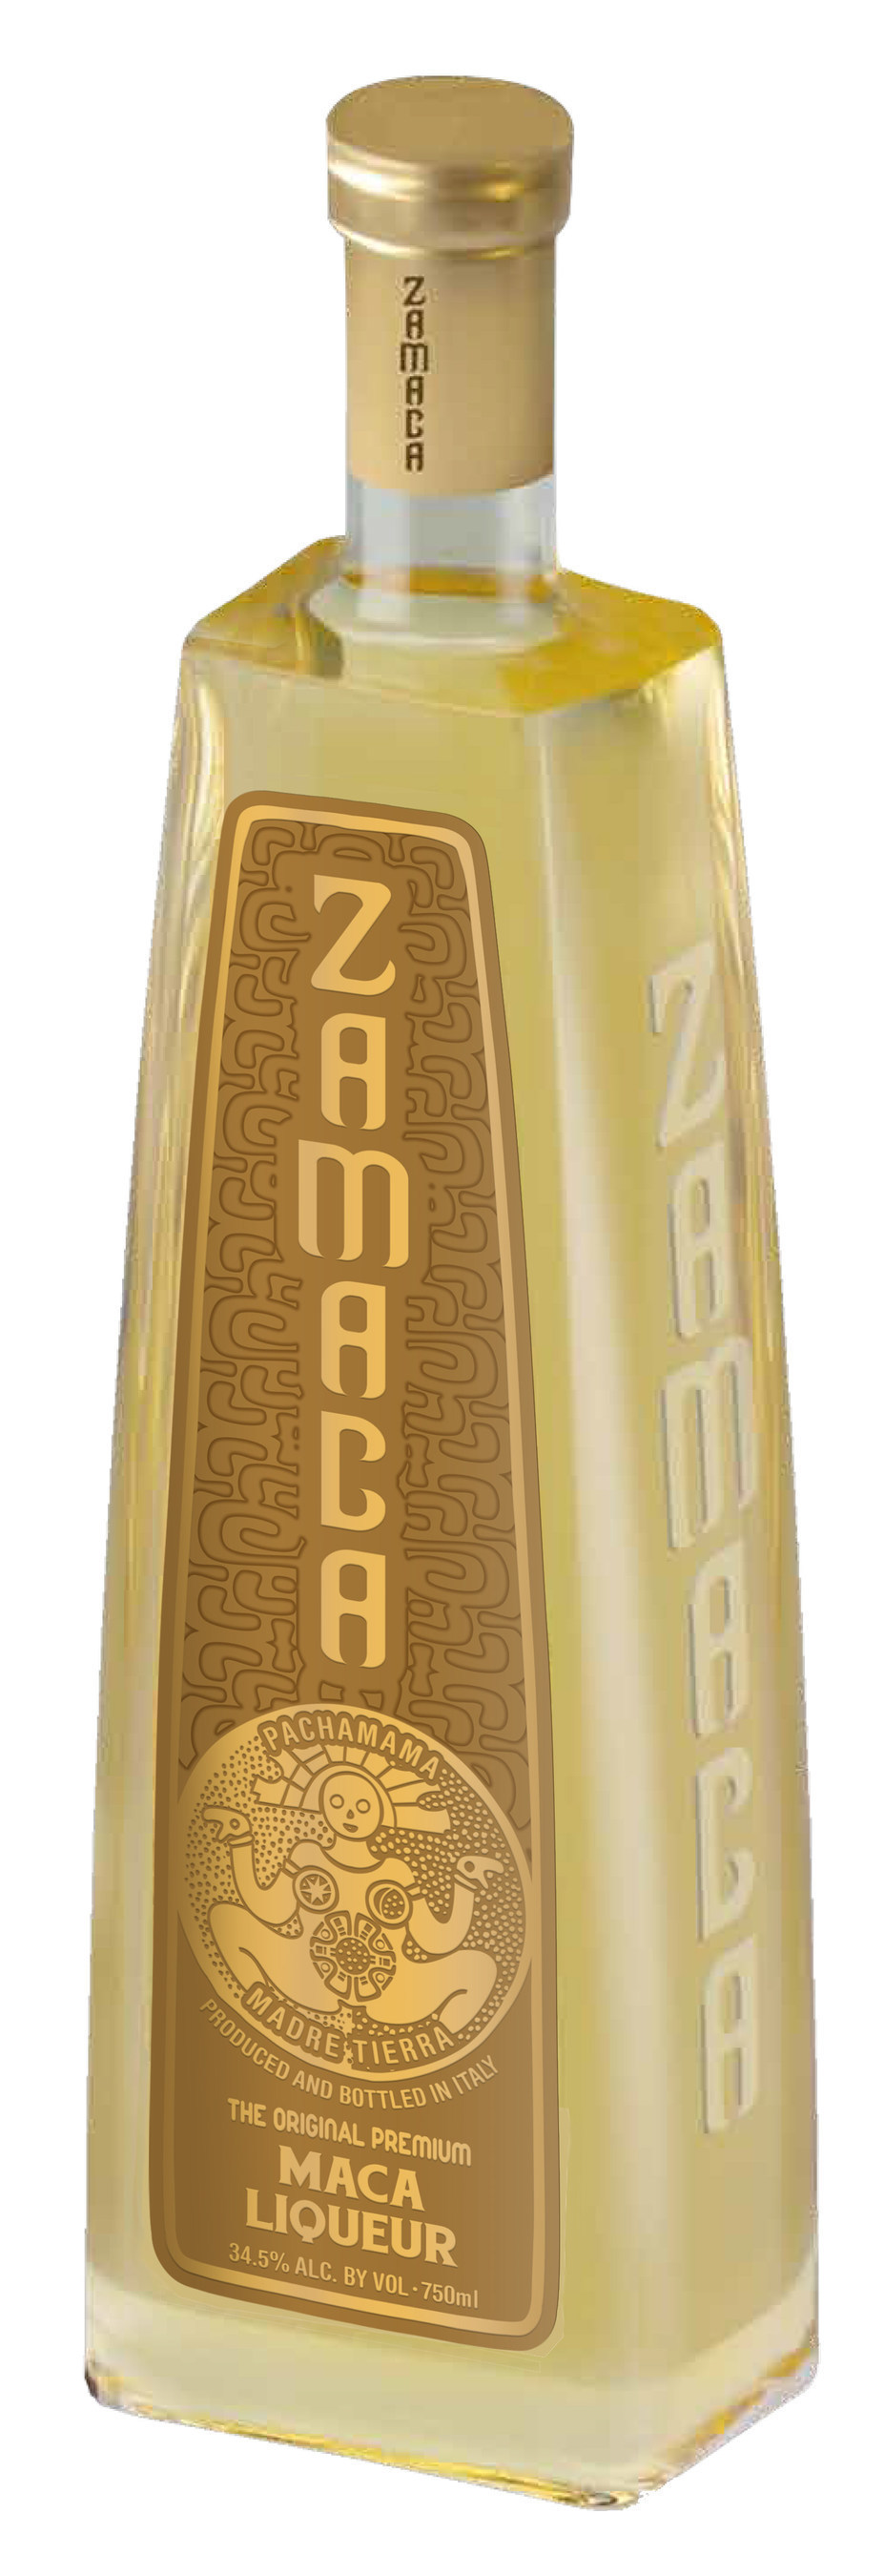 Zamaca the Original Premium Maca Liqueur - Feel the Fuego!